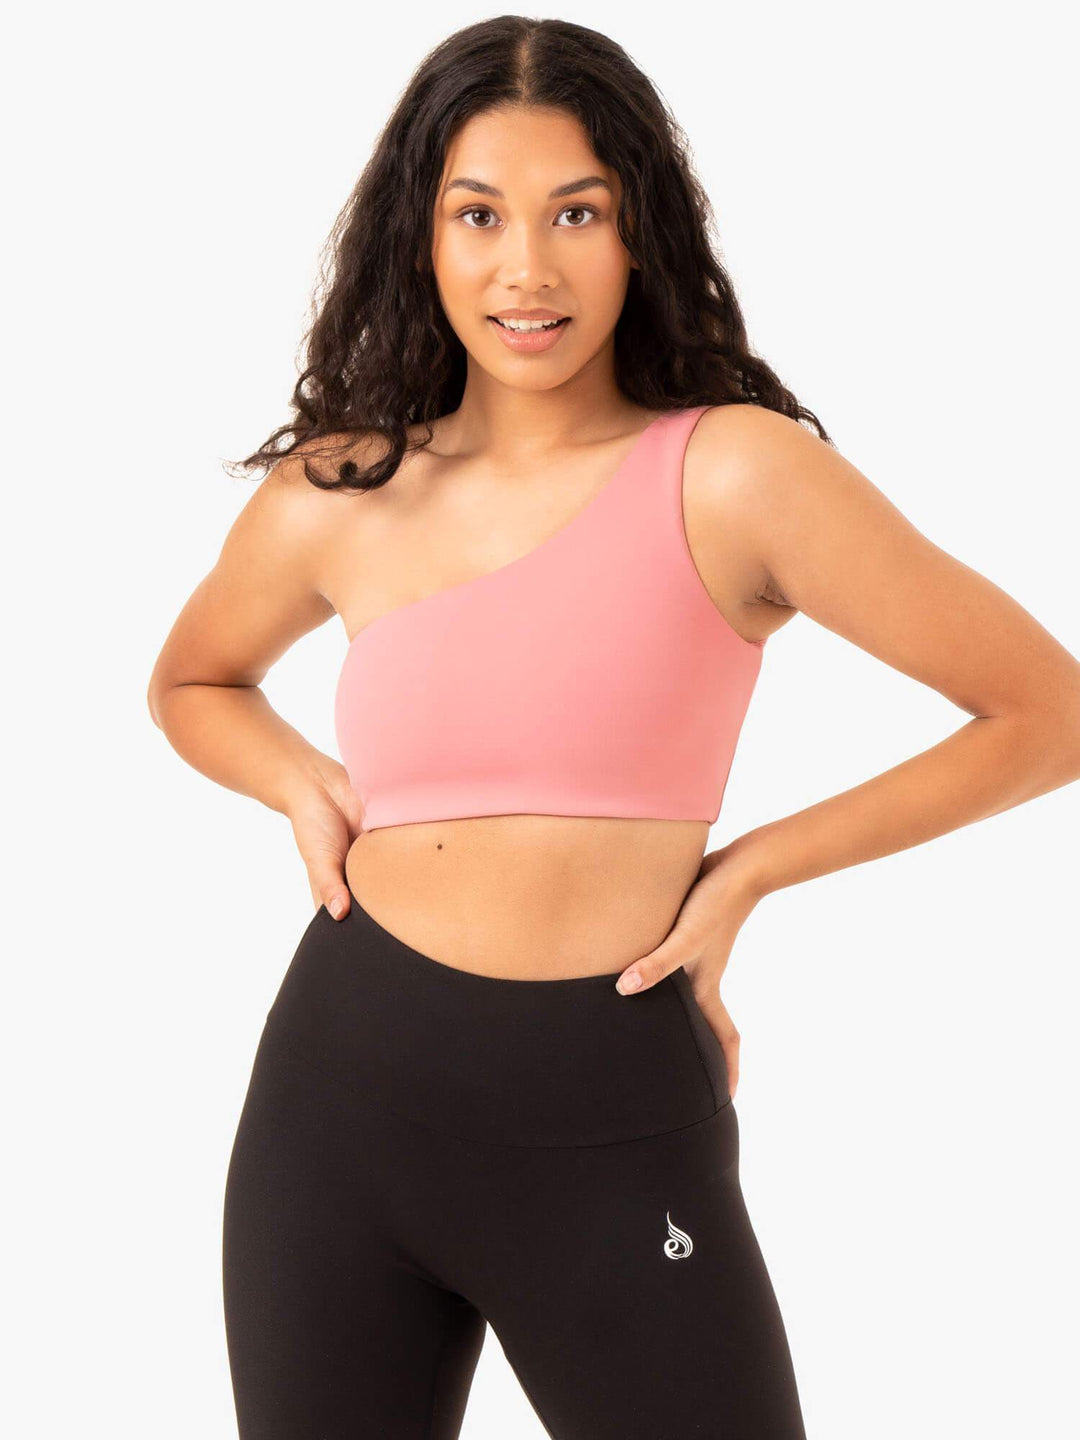 Adapt One Shoulder Sports Bra - Blush Pink Clothing Ryderwear 